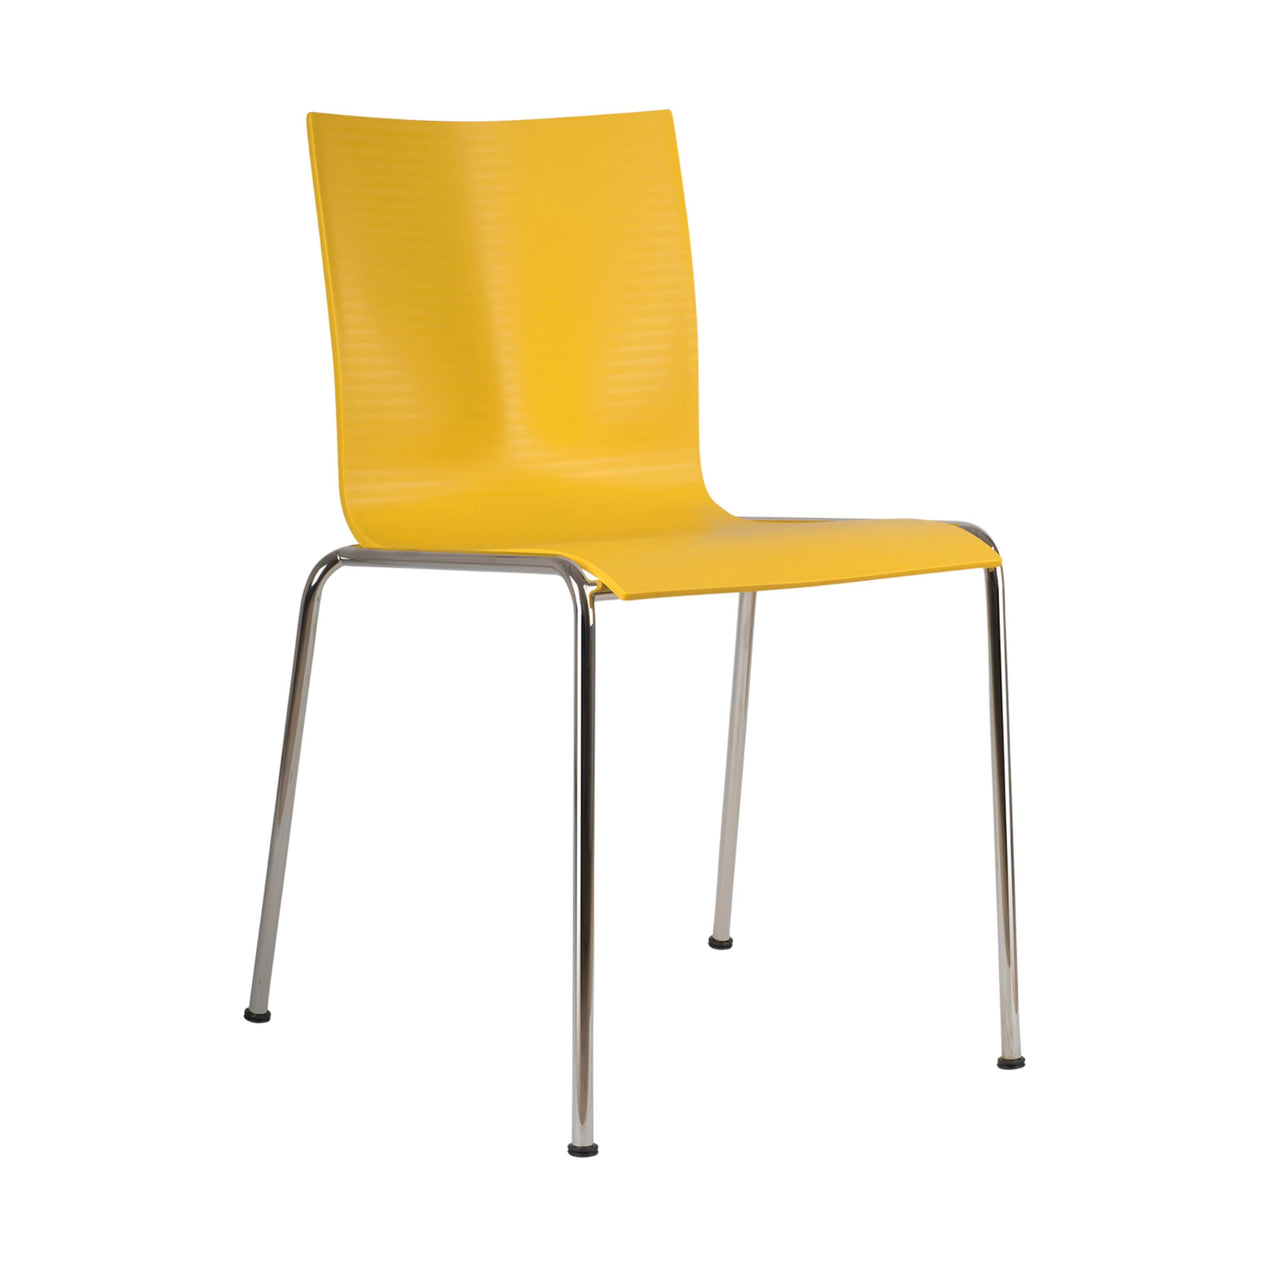 Chairik 101 Chair: Plastic + Lemon